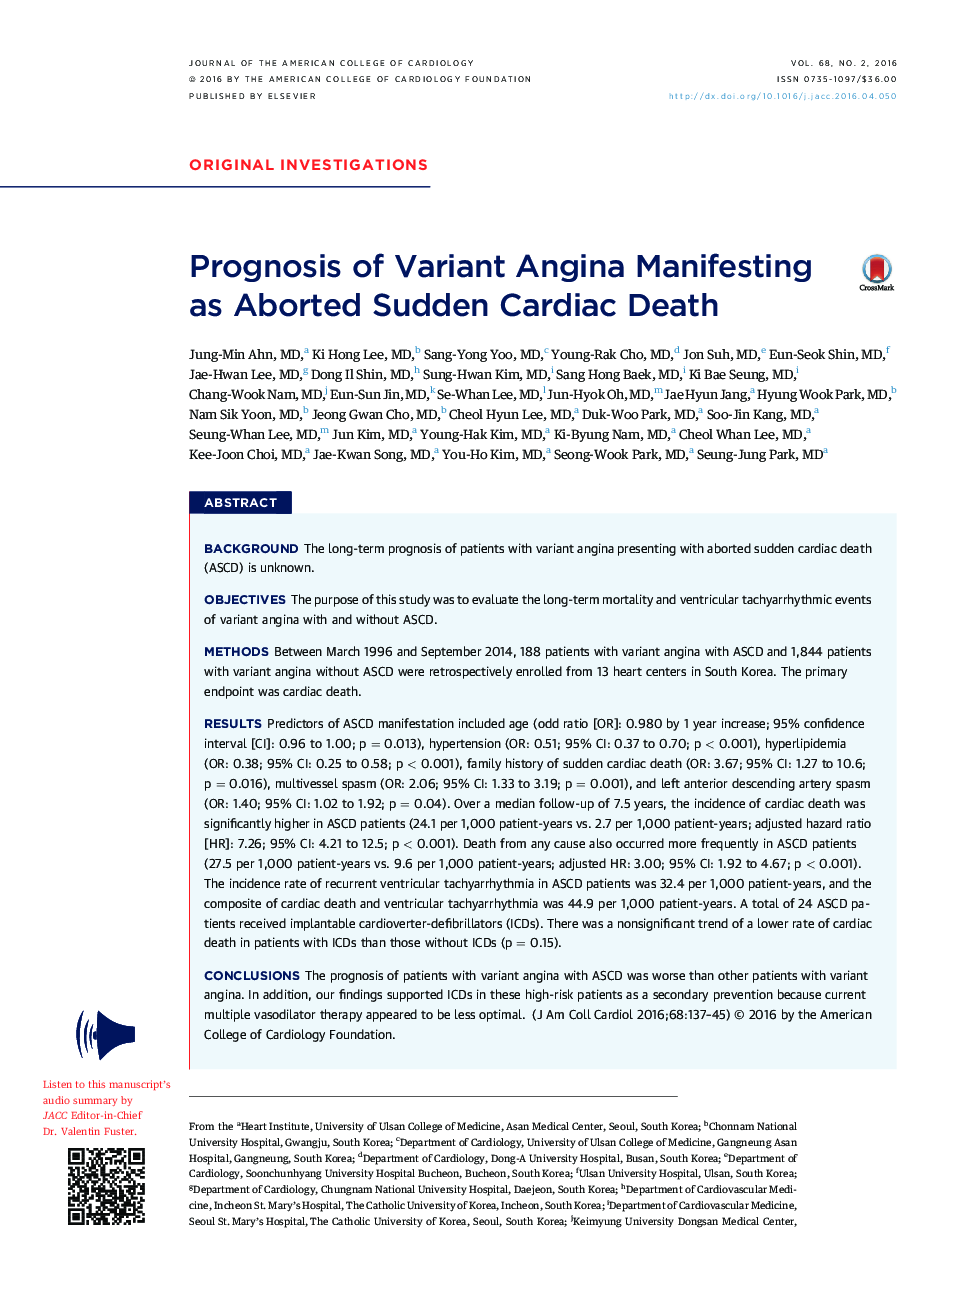 Prognosis of Variant Angina Manifesting as Aborted Sudden Cardiac Death 